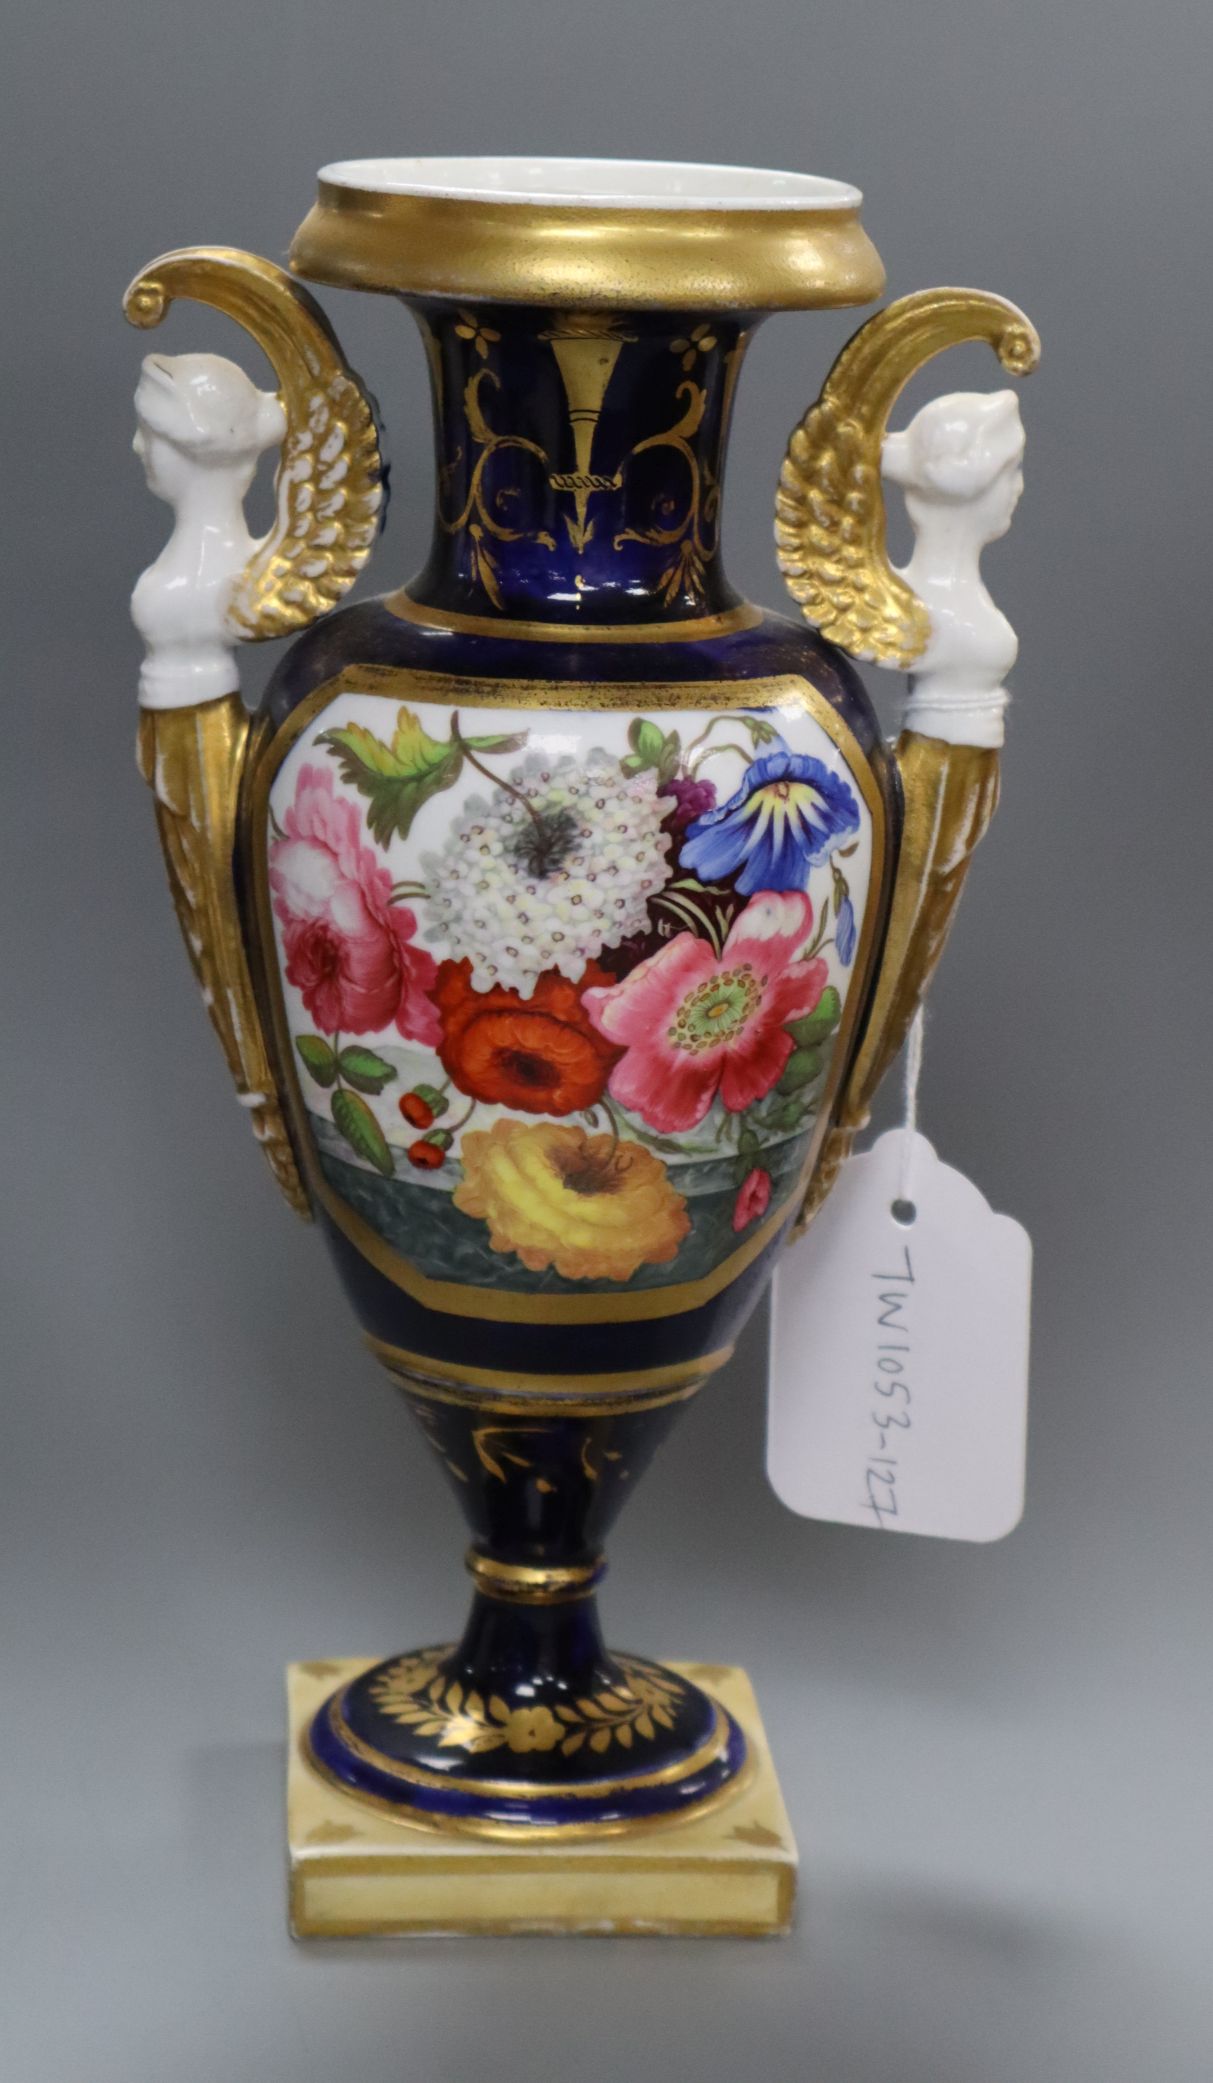 An English porcelain pedestal vase, c.1820, winged female bust handles